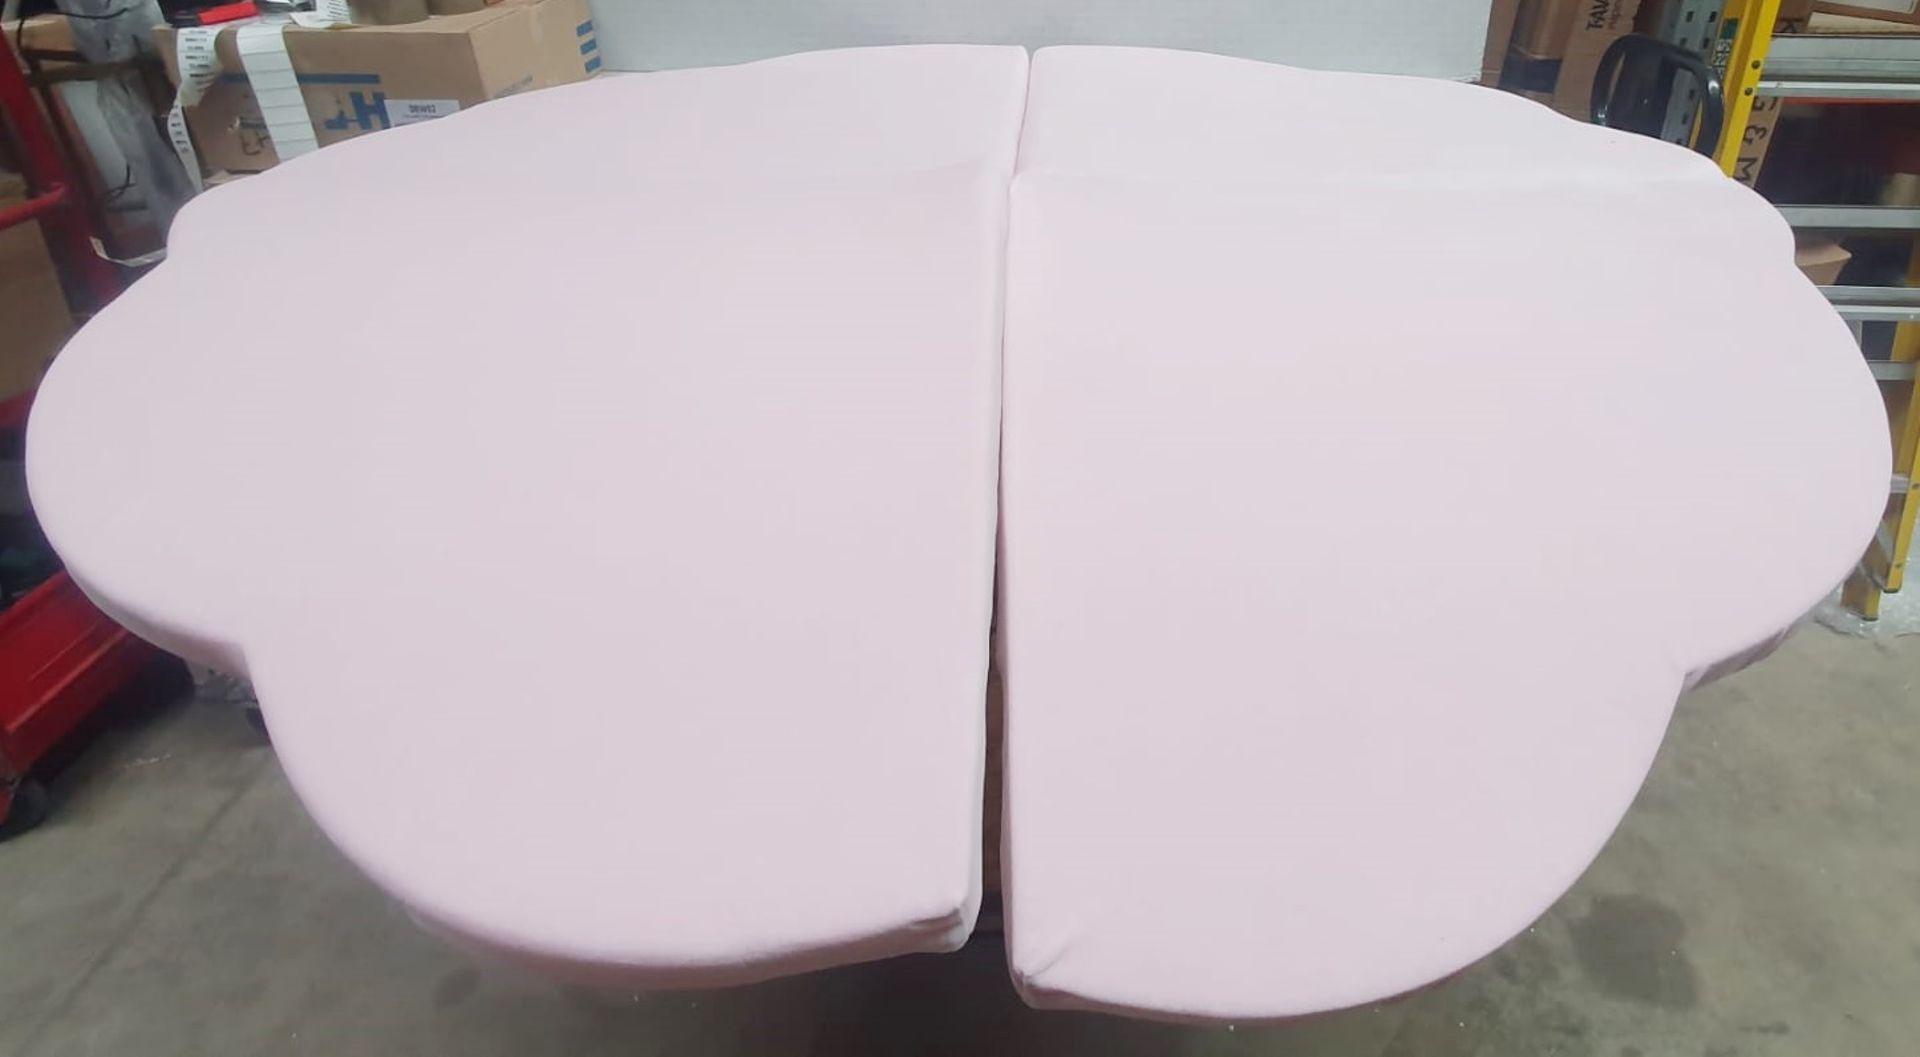 1 x MEOWBABY Cloud Foam Play Mat In Pink - Unused Boxed Stock - Original Price £120.00 - Image 5 of 5